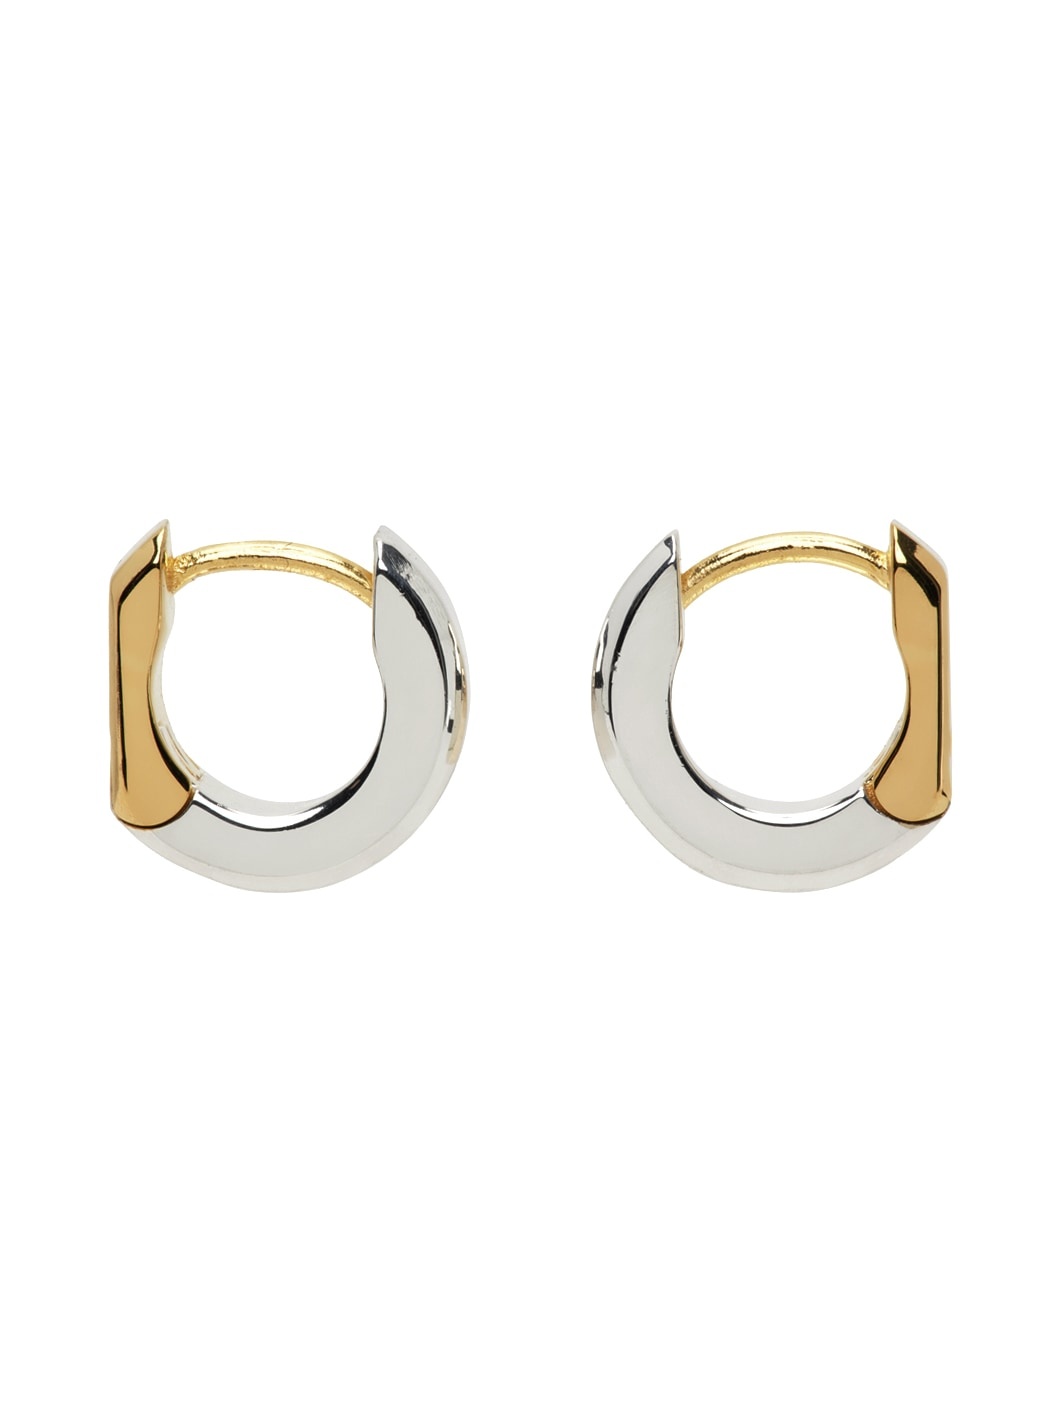 Gold & Silver Hinge Earrings - 1